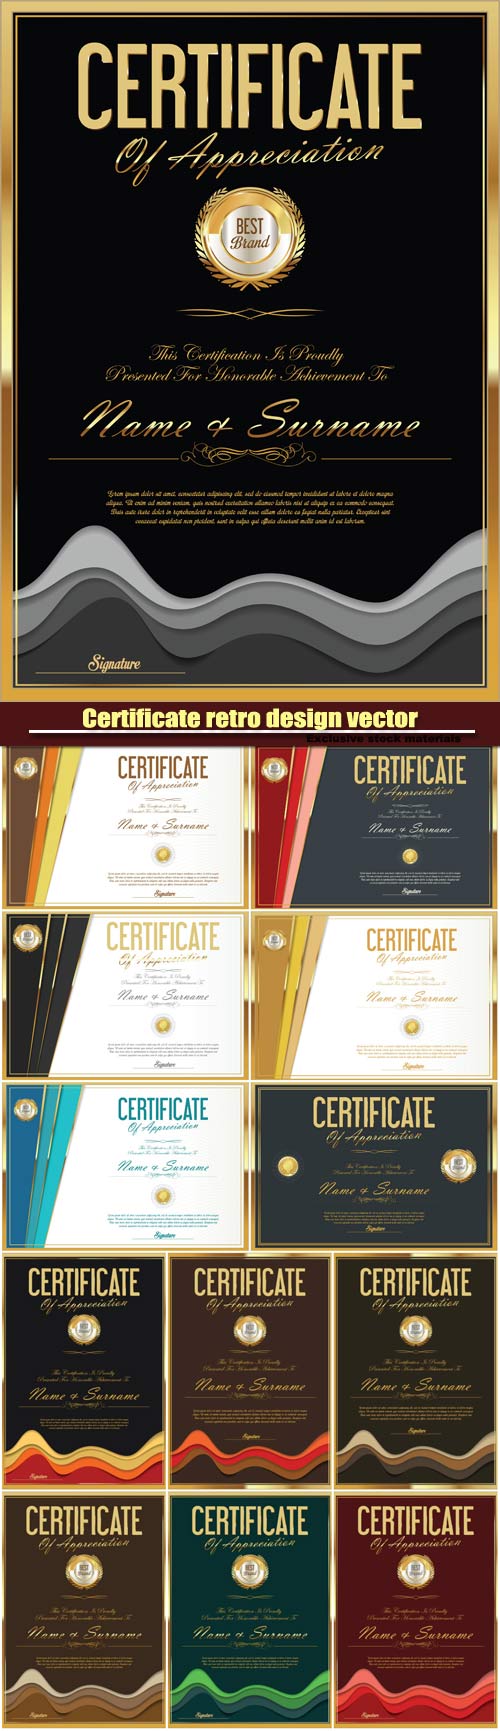 Certificate retro design vector template